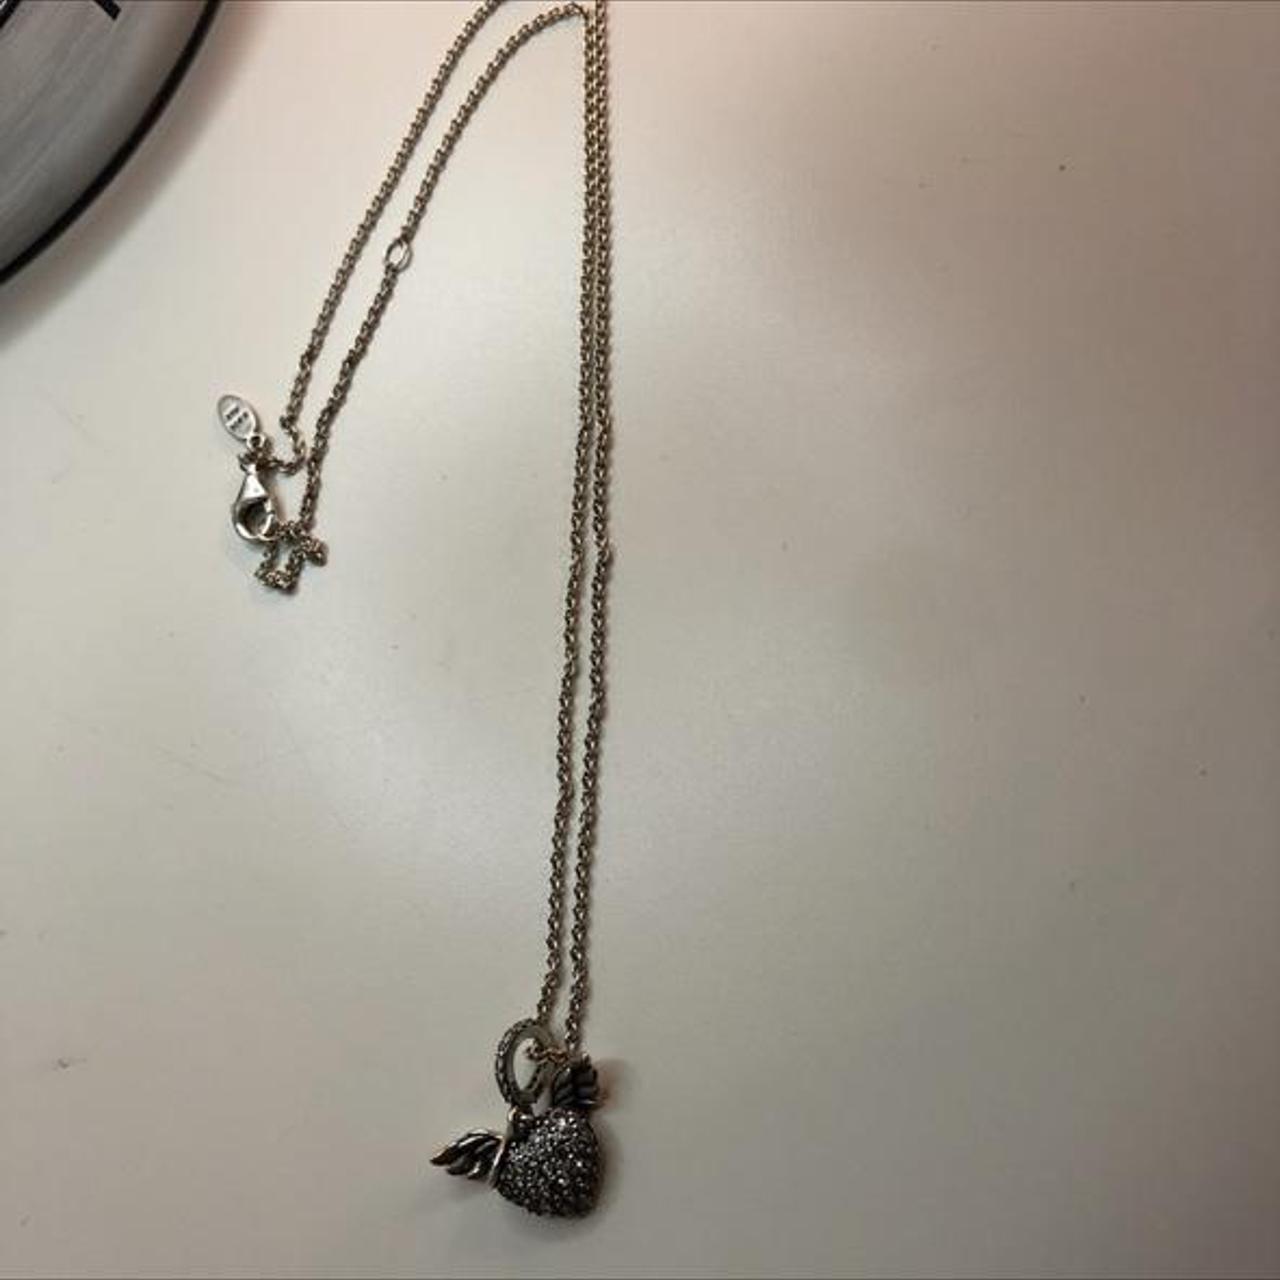 Hallmark Fine Jewelry Lovebirds Diamond Necklace in Sterling Silver |  Jewelry by Hallmark Fine Jewelry